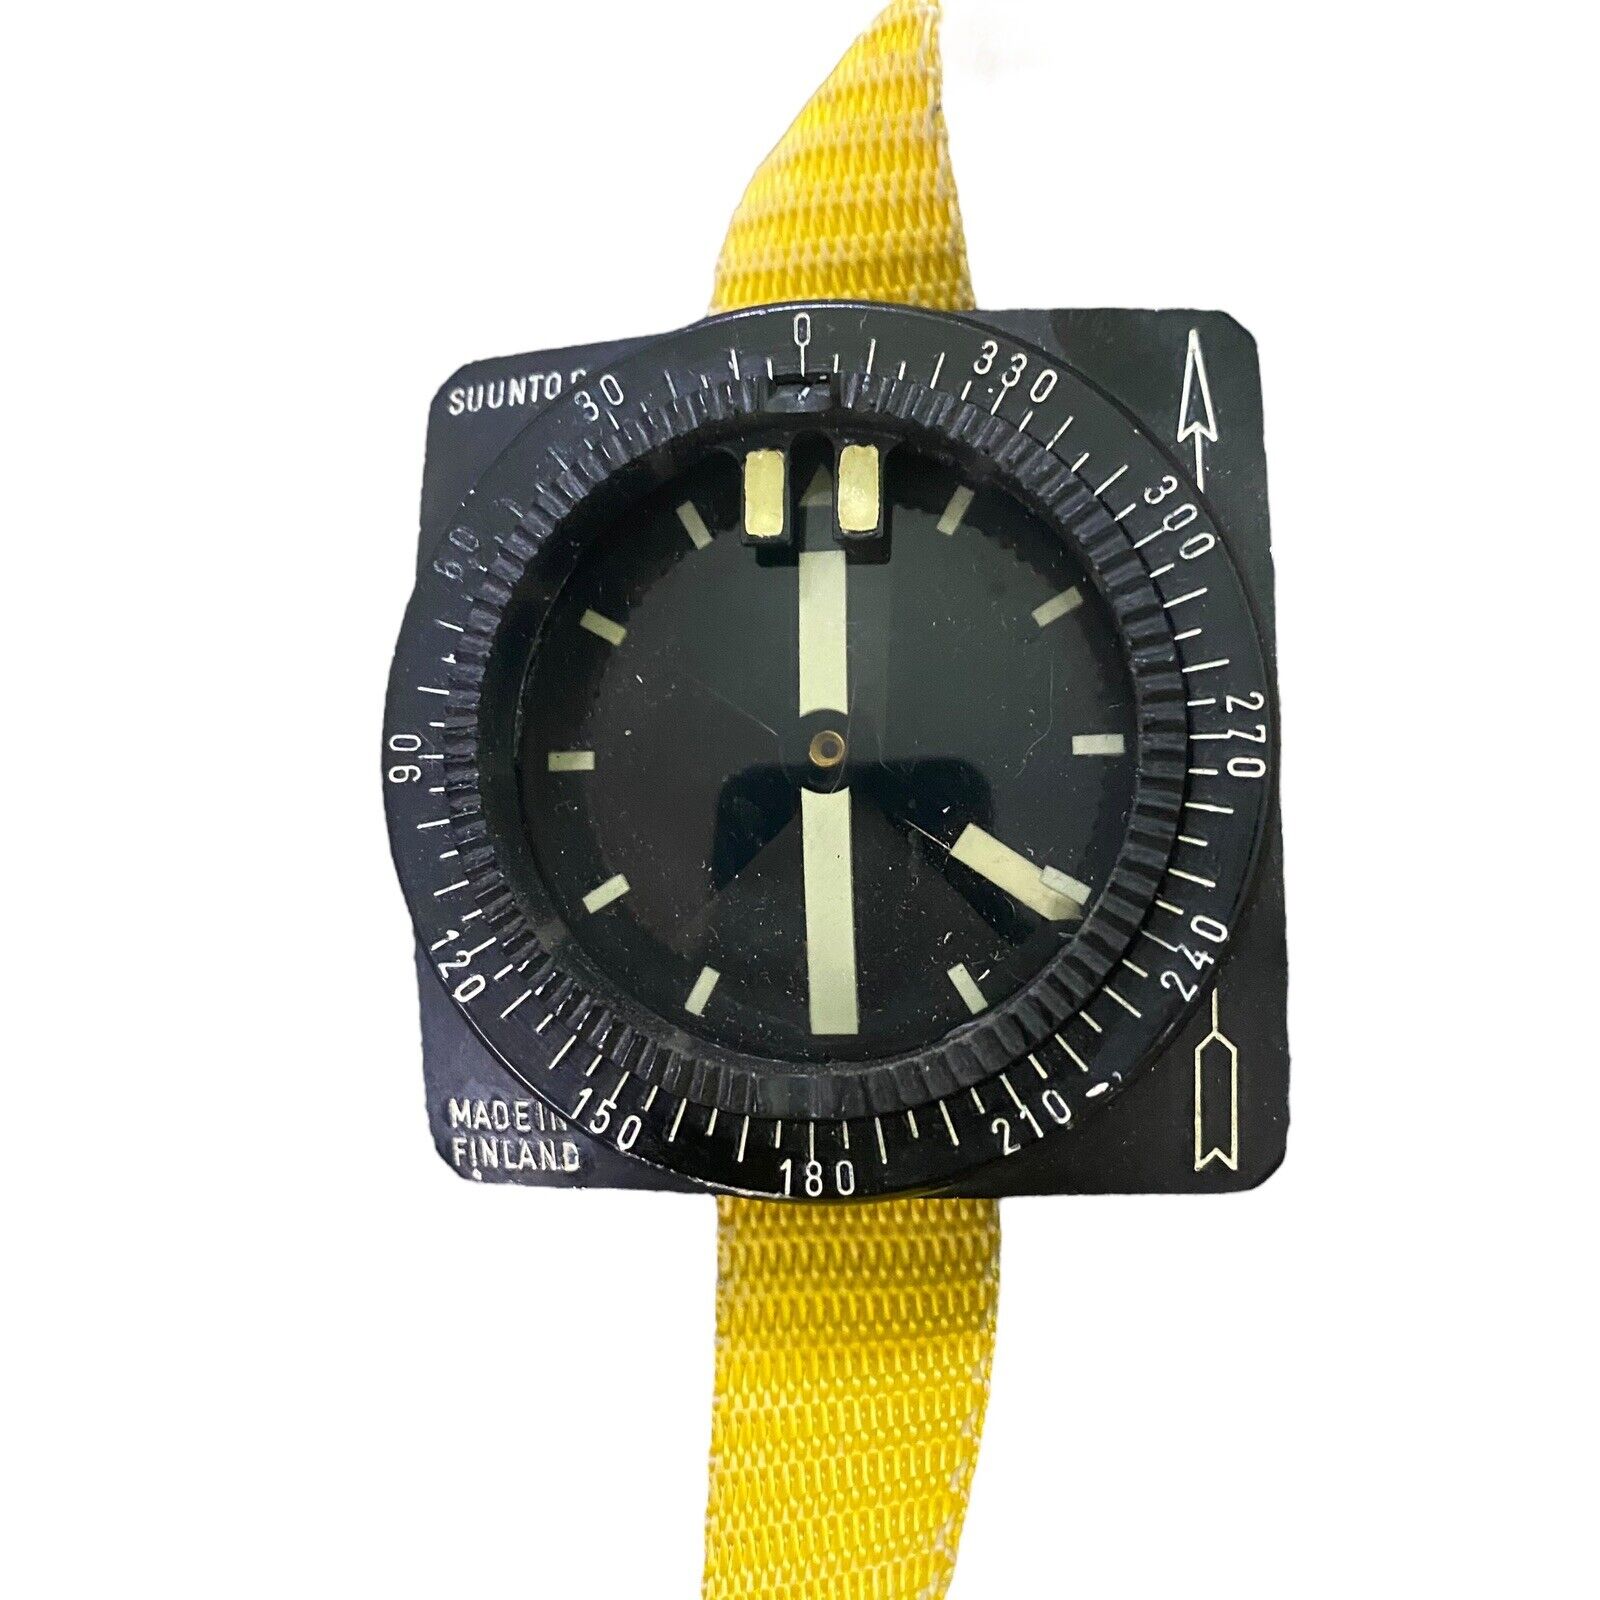 Suunto Vintage Wrist Mount Scuba Dive Compass Made in Finland